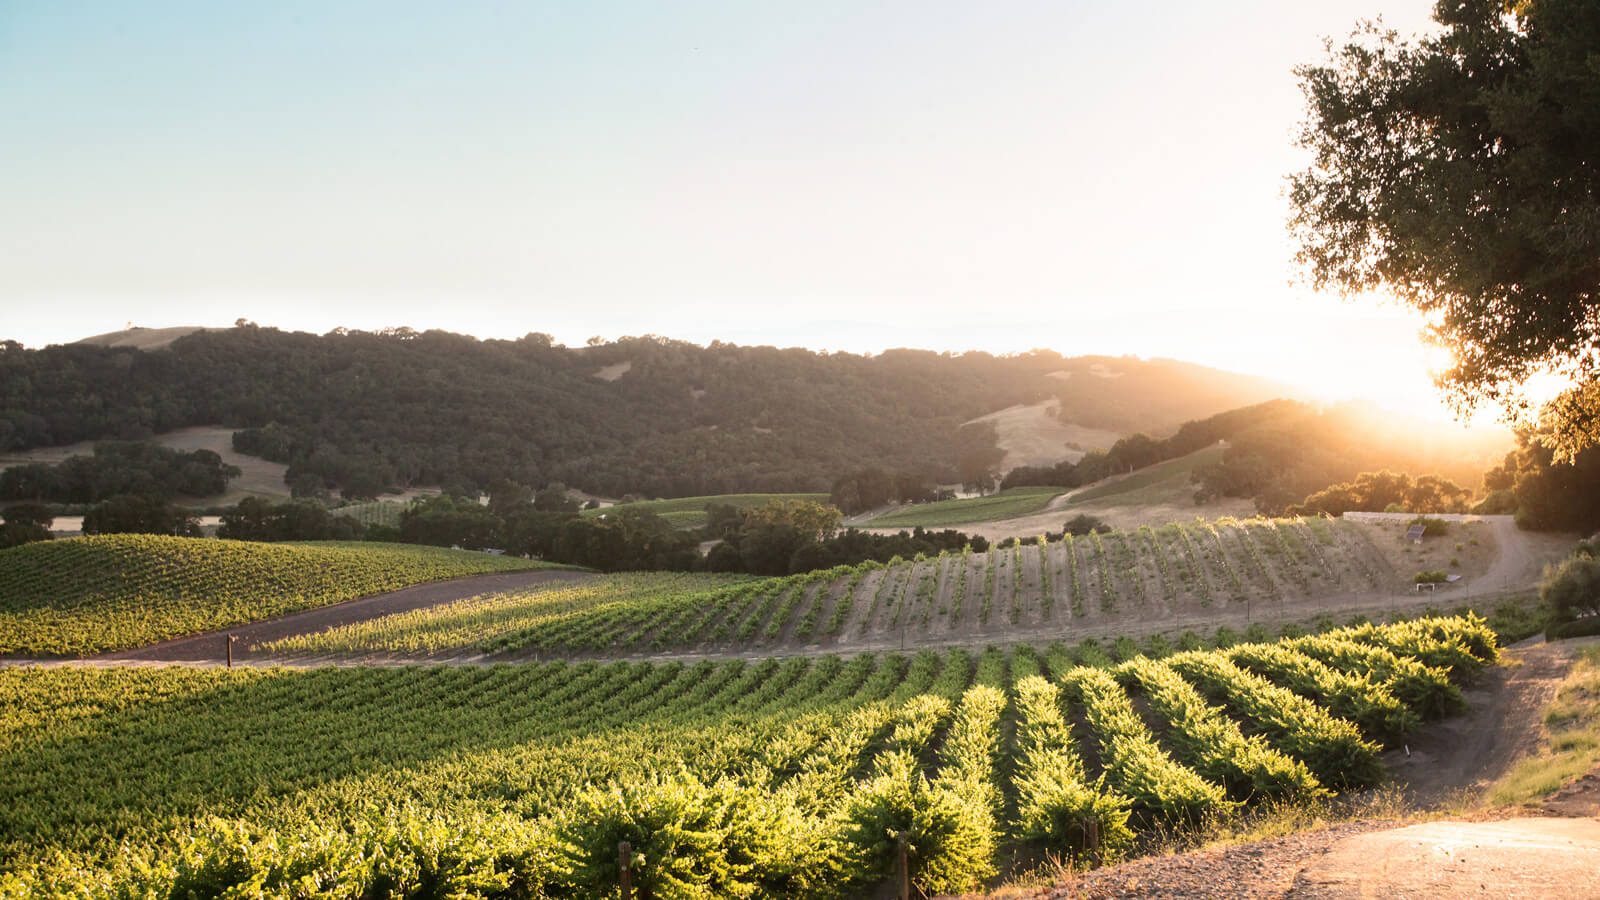 Soundless video of the Grosso Kresser vineyard in the golden, morning light.